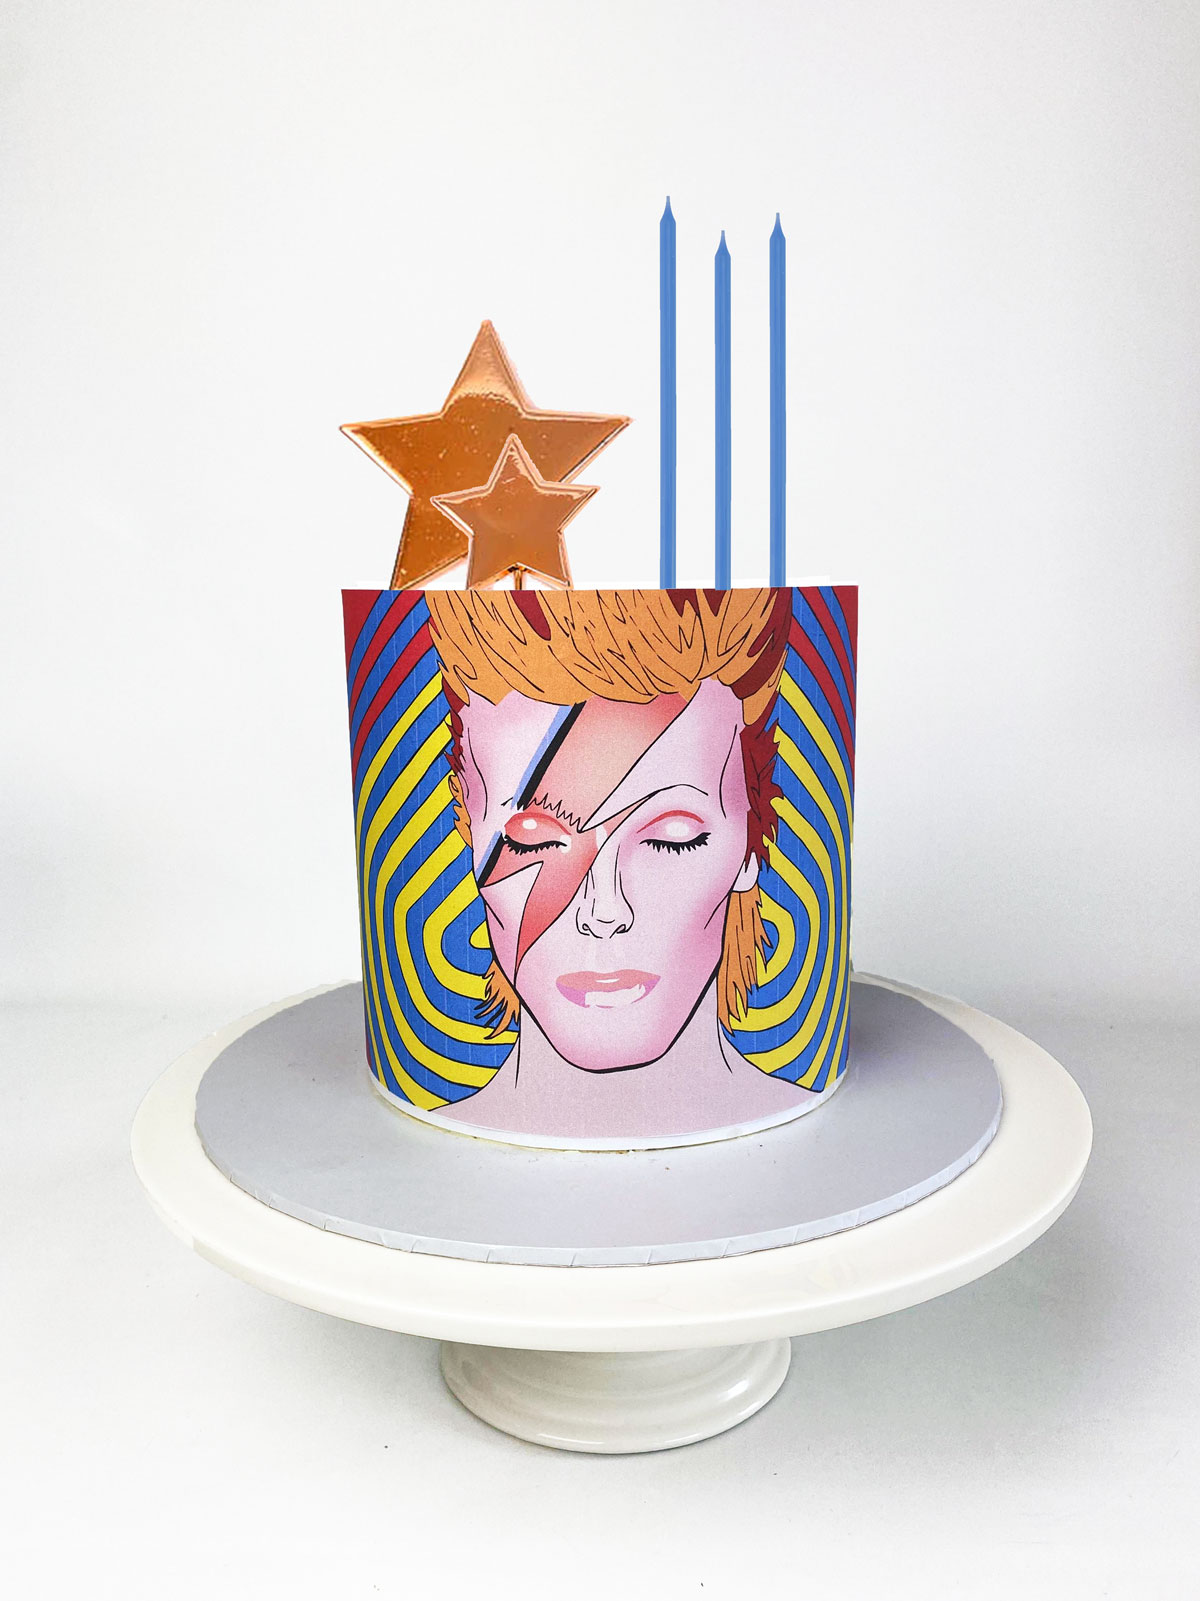 Bowie cake